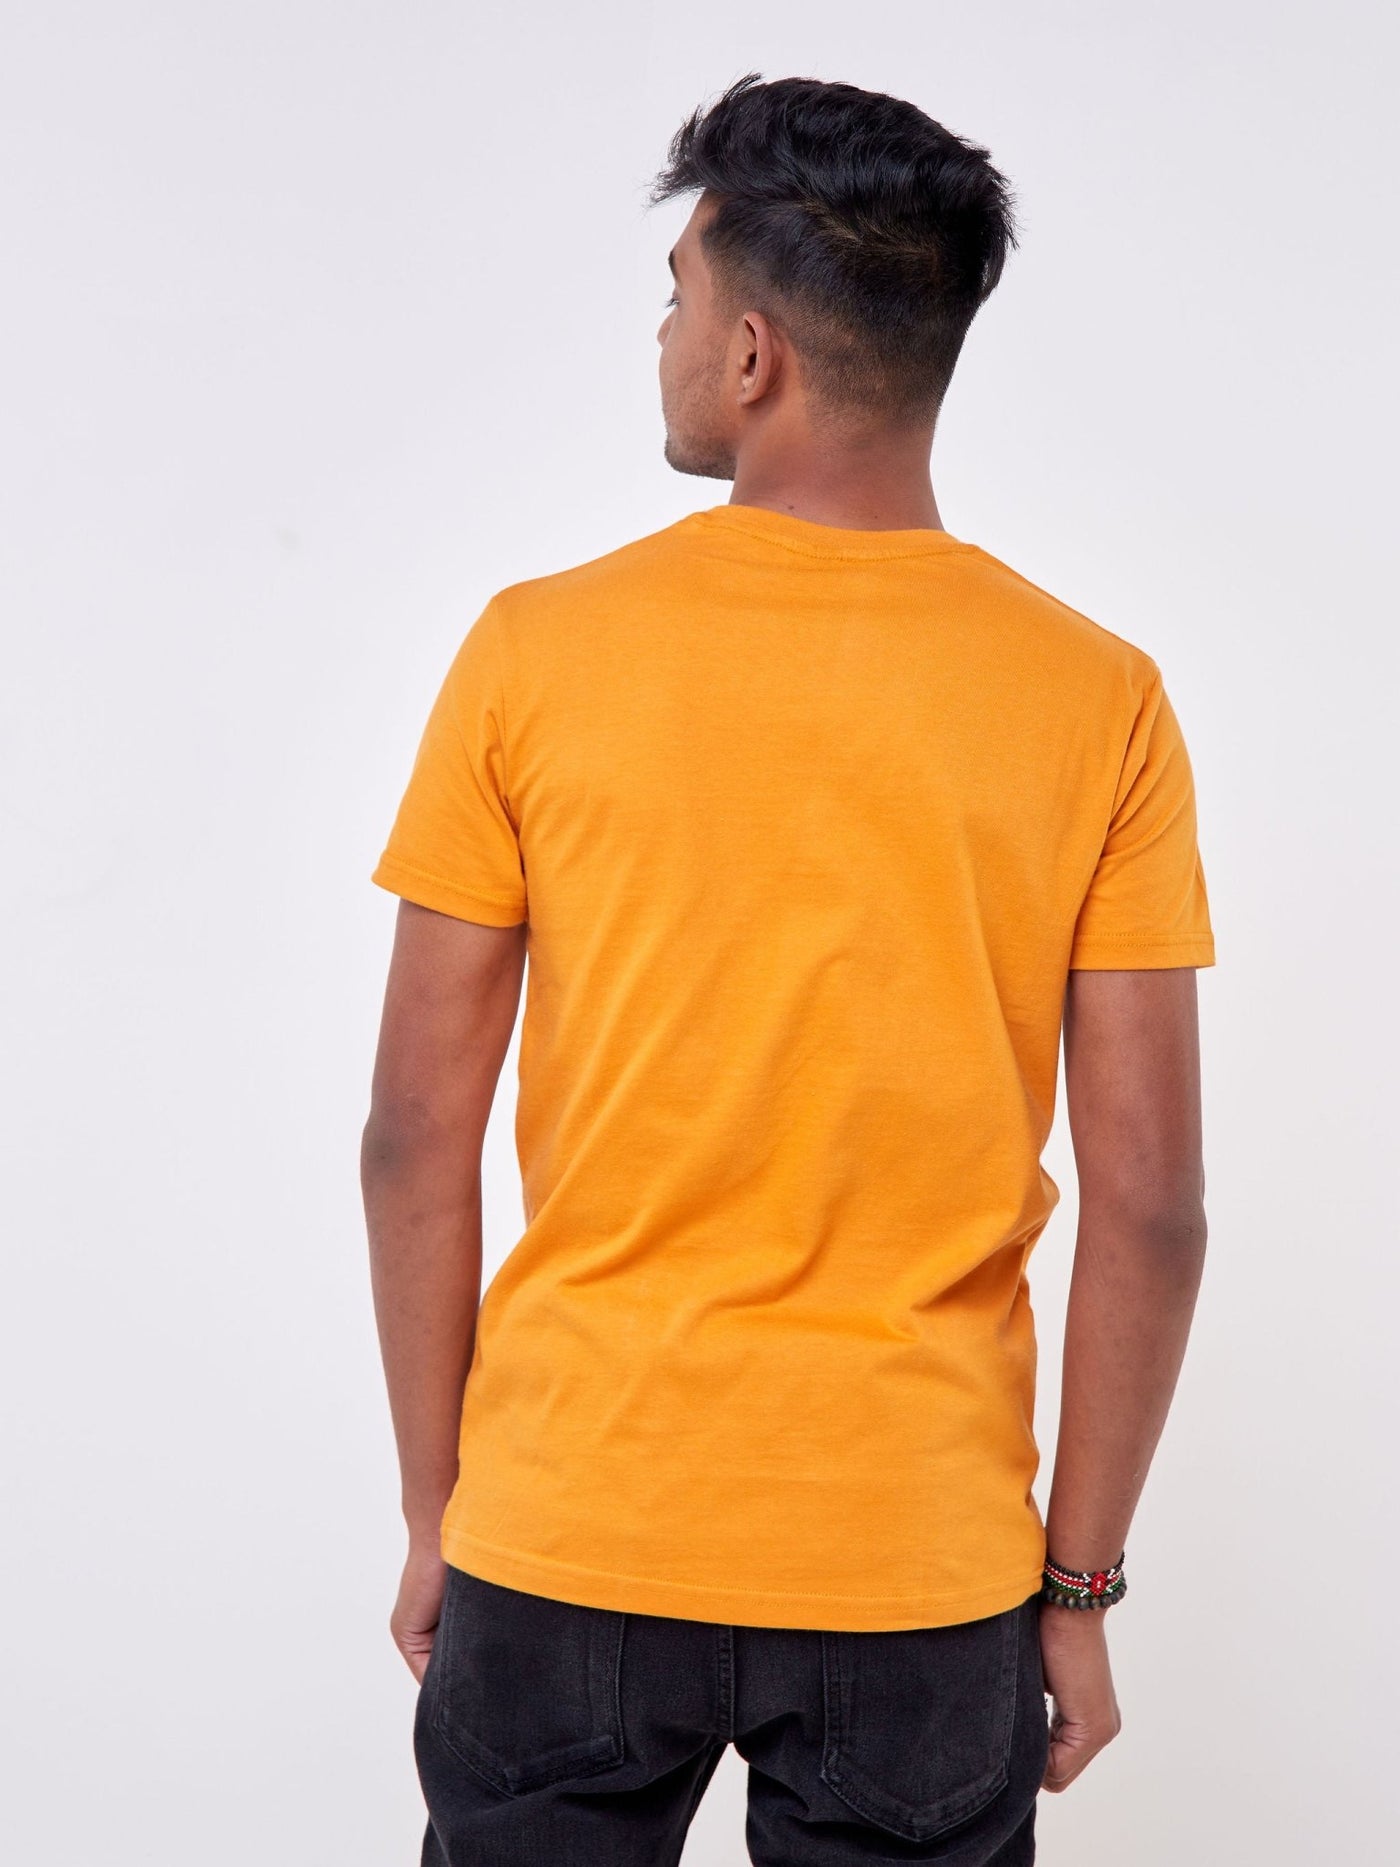 King's Collection Unisex Round Neck T-shirt - Mustard - Shop Zetu Kenya